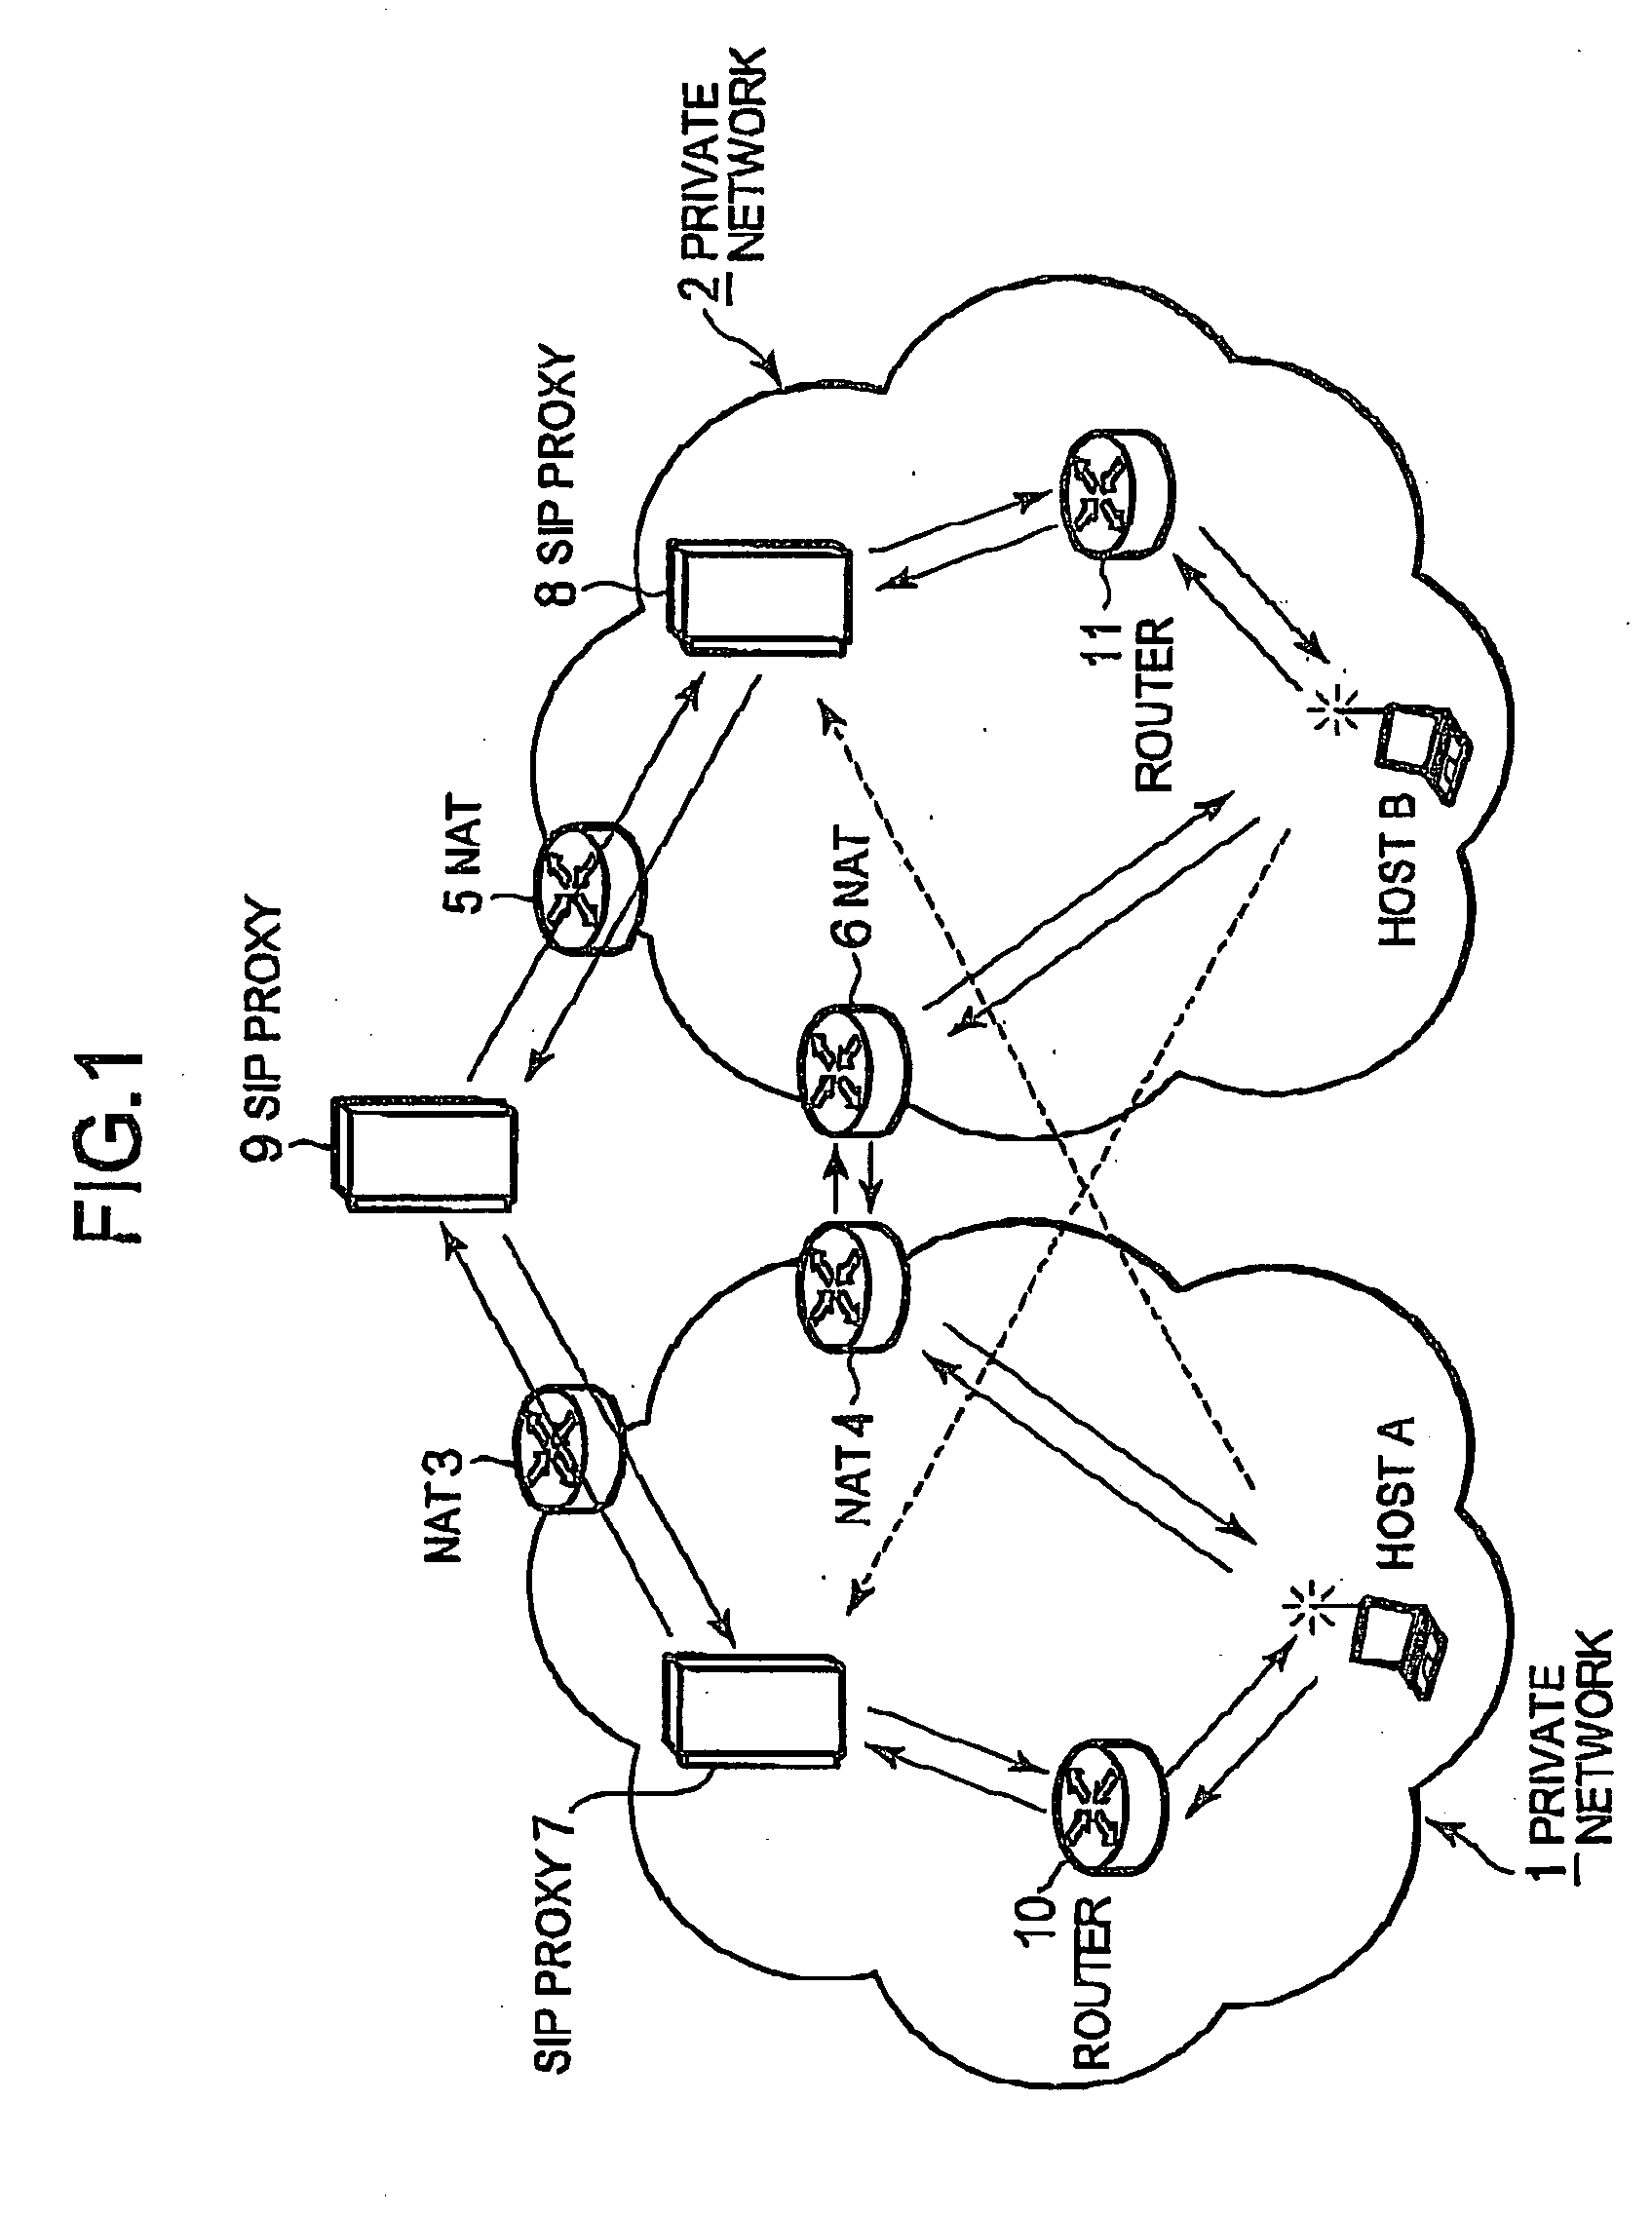 Method for traversing network address translators for SIP-signaled sessions